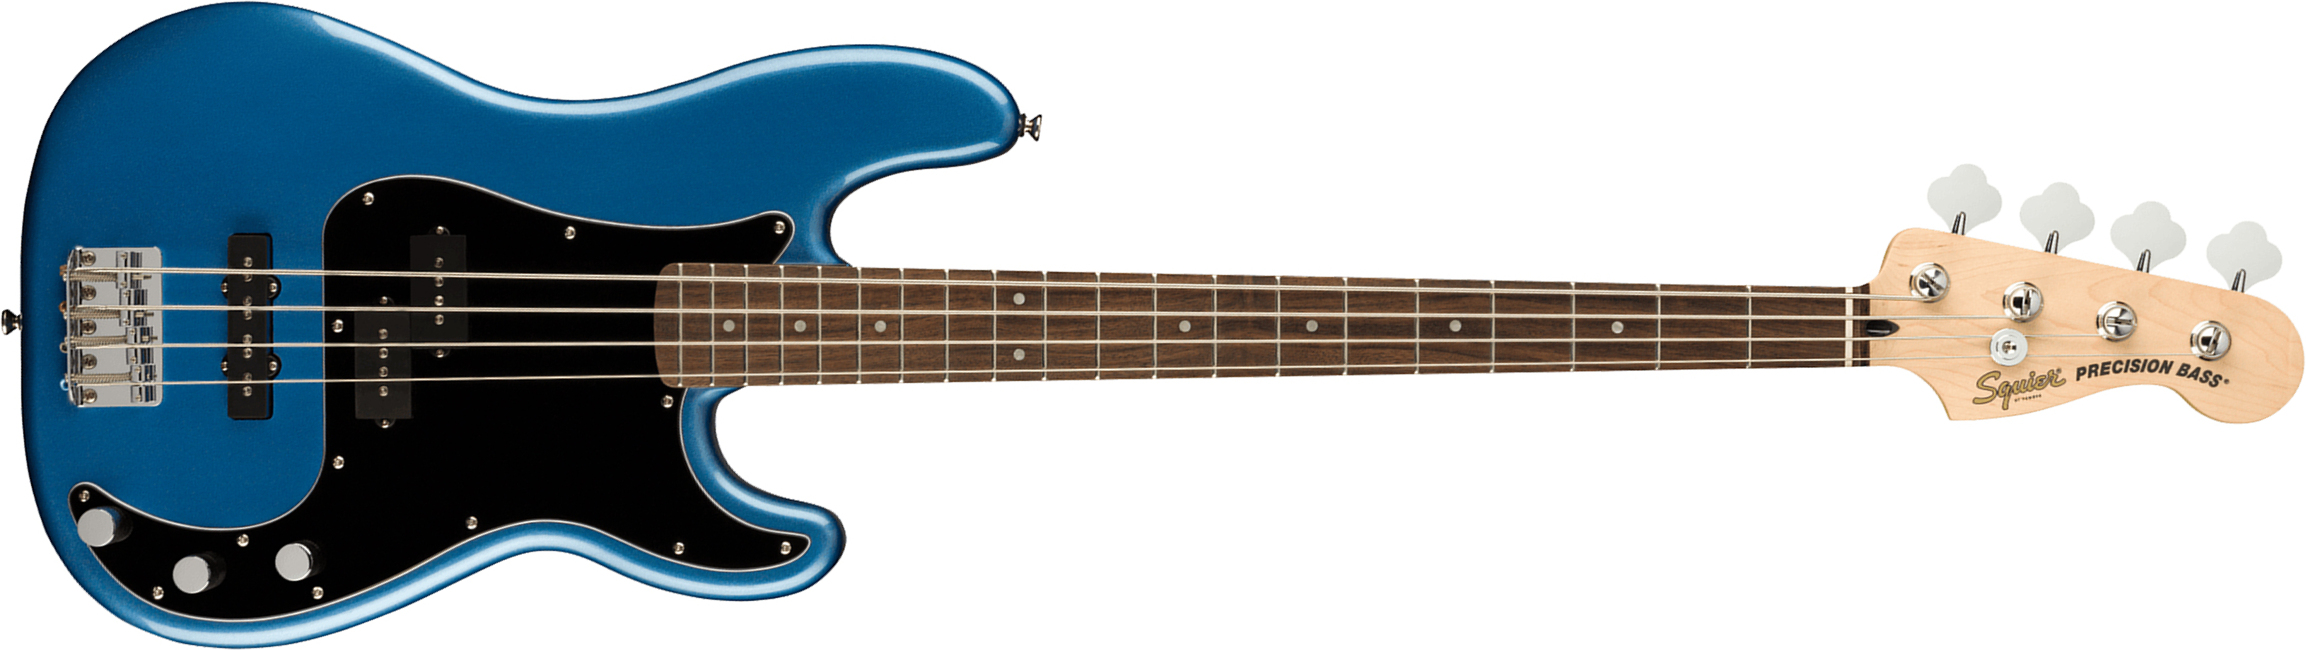 Squier Precision Bass Affinity Pj 2021 Lau - Lake Placid Blue - Solidbody E-bass - Main picture